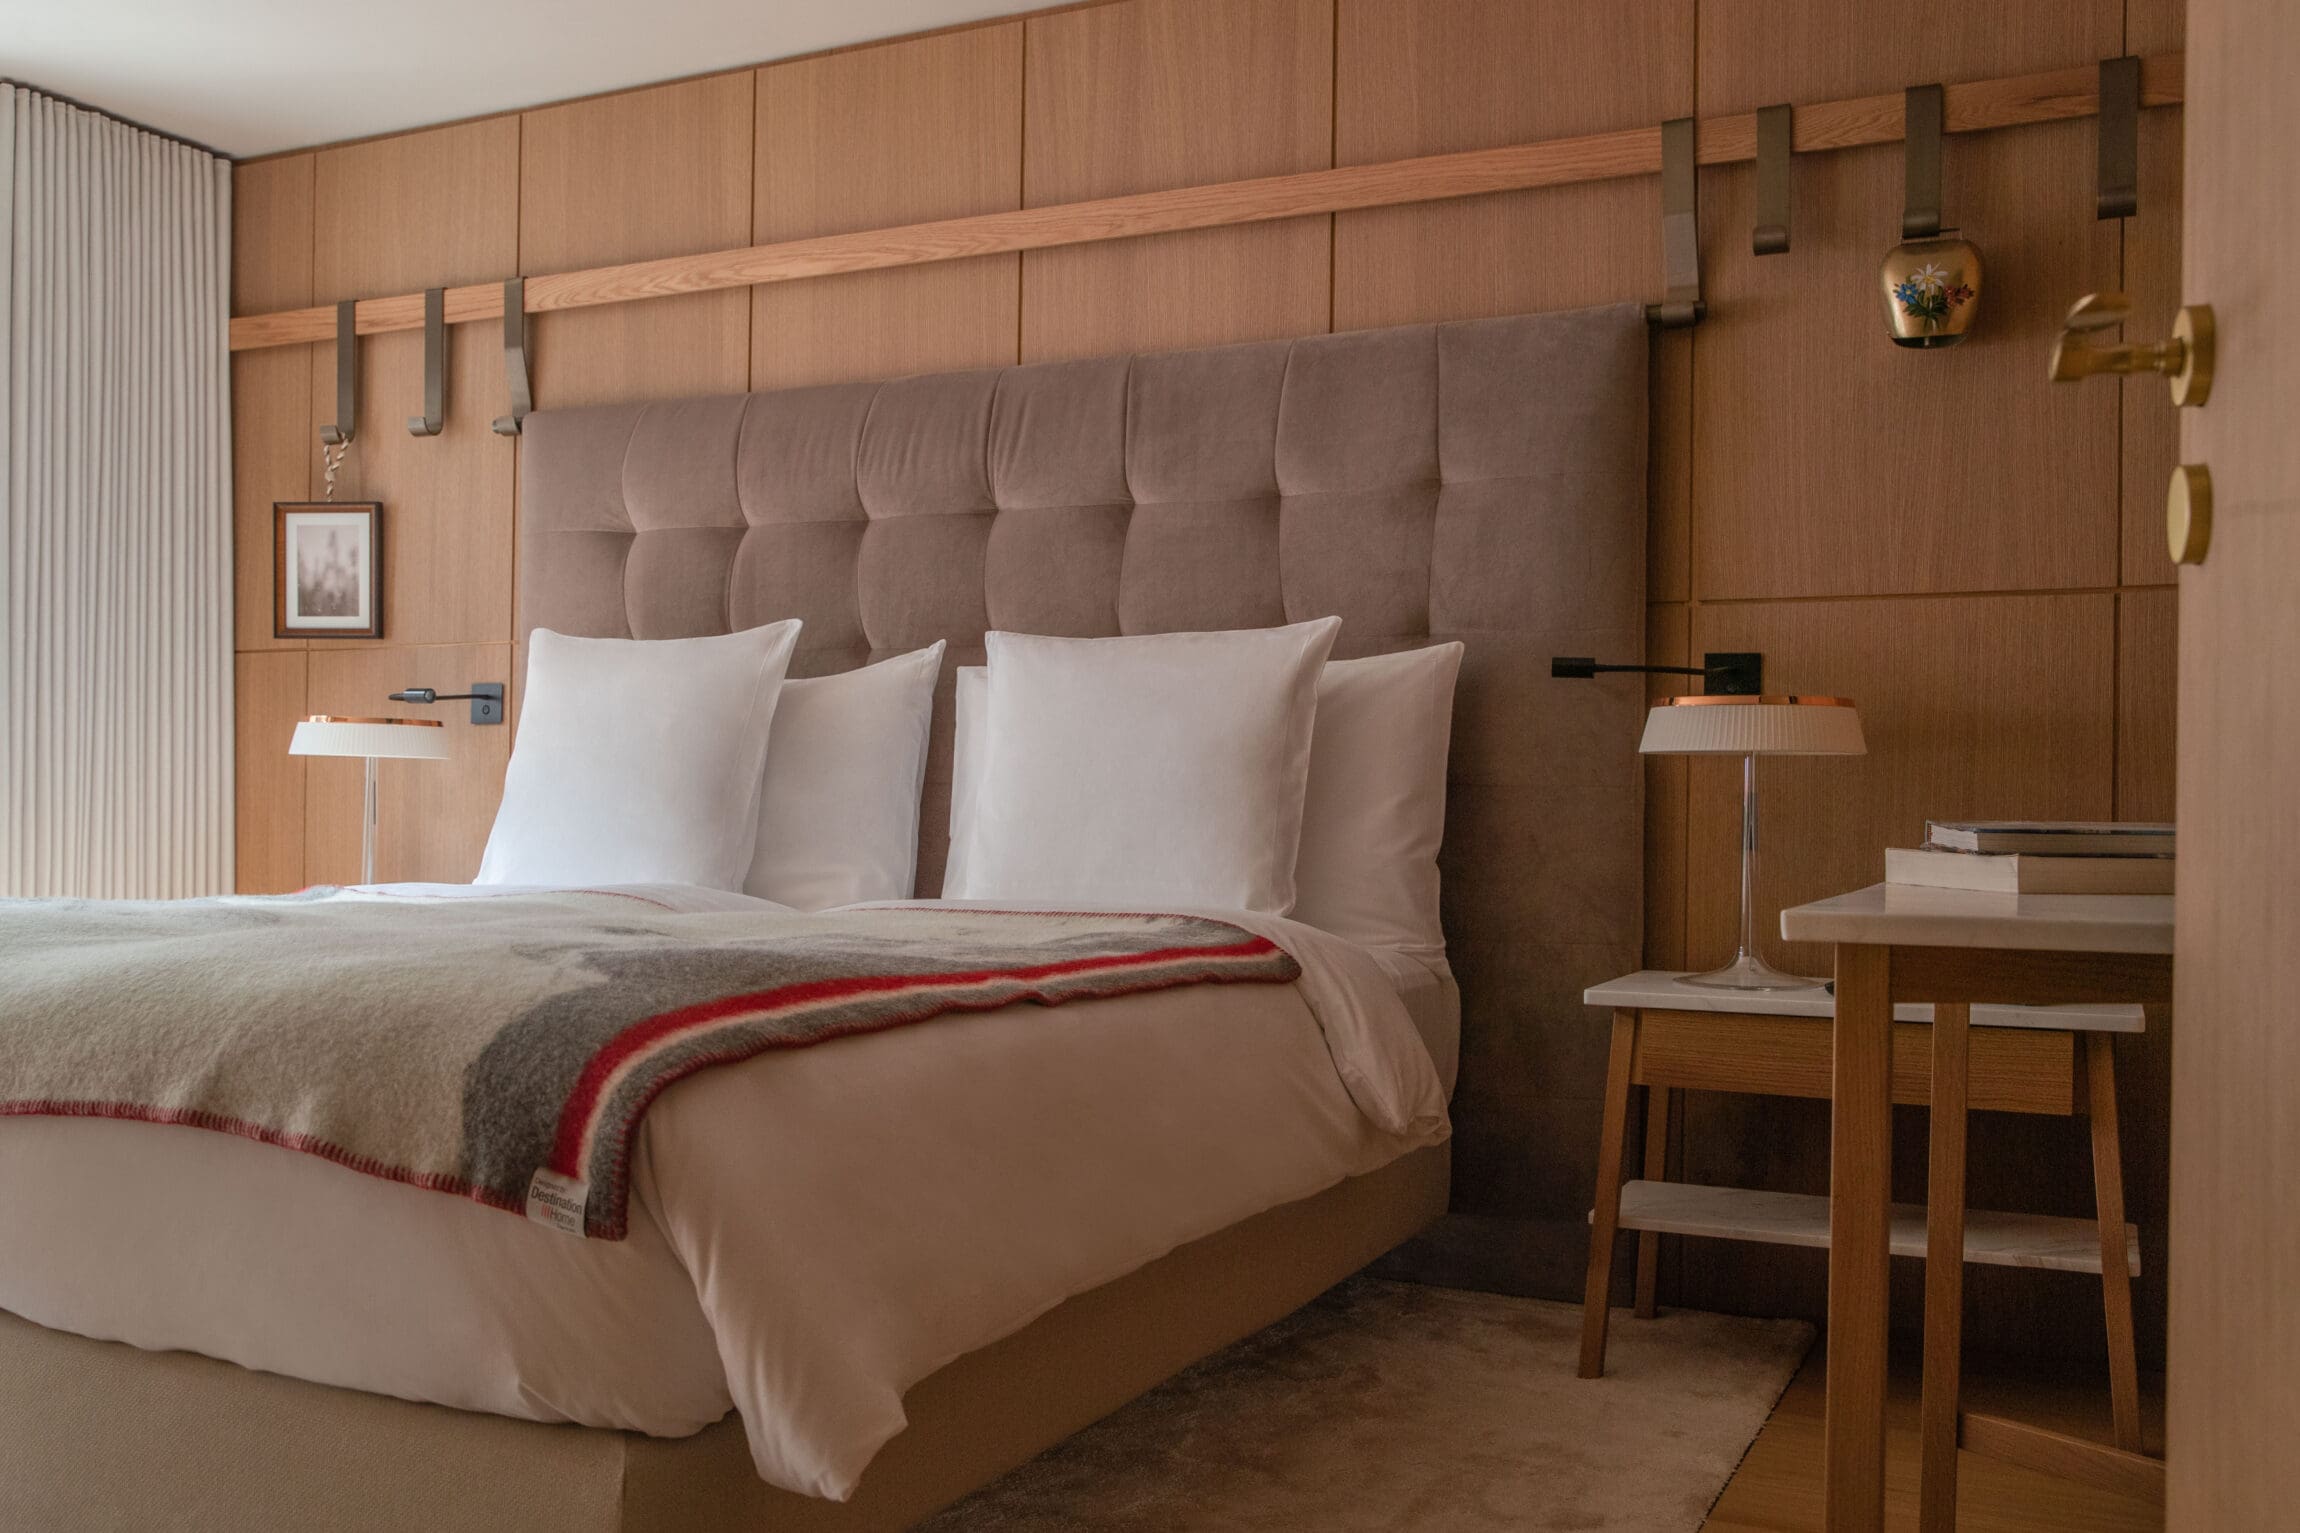 A bedroom in Hotel Schweizerhof, Zermatt